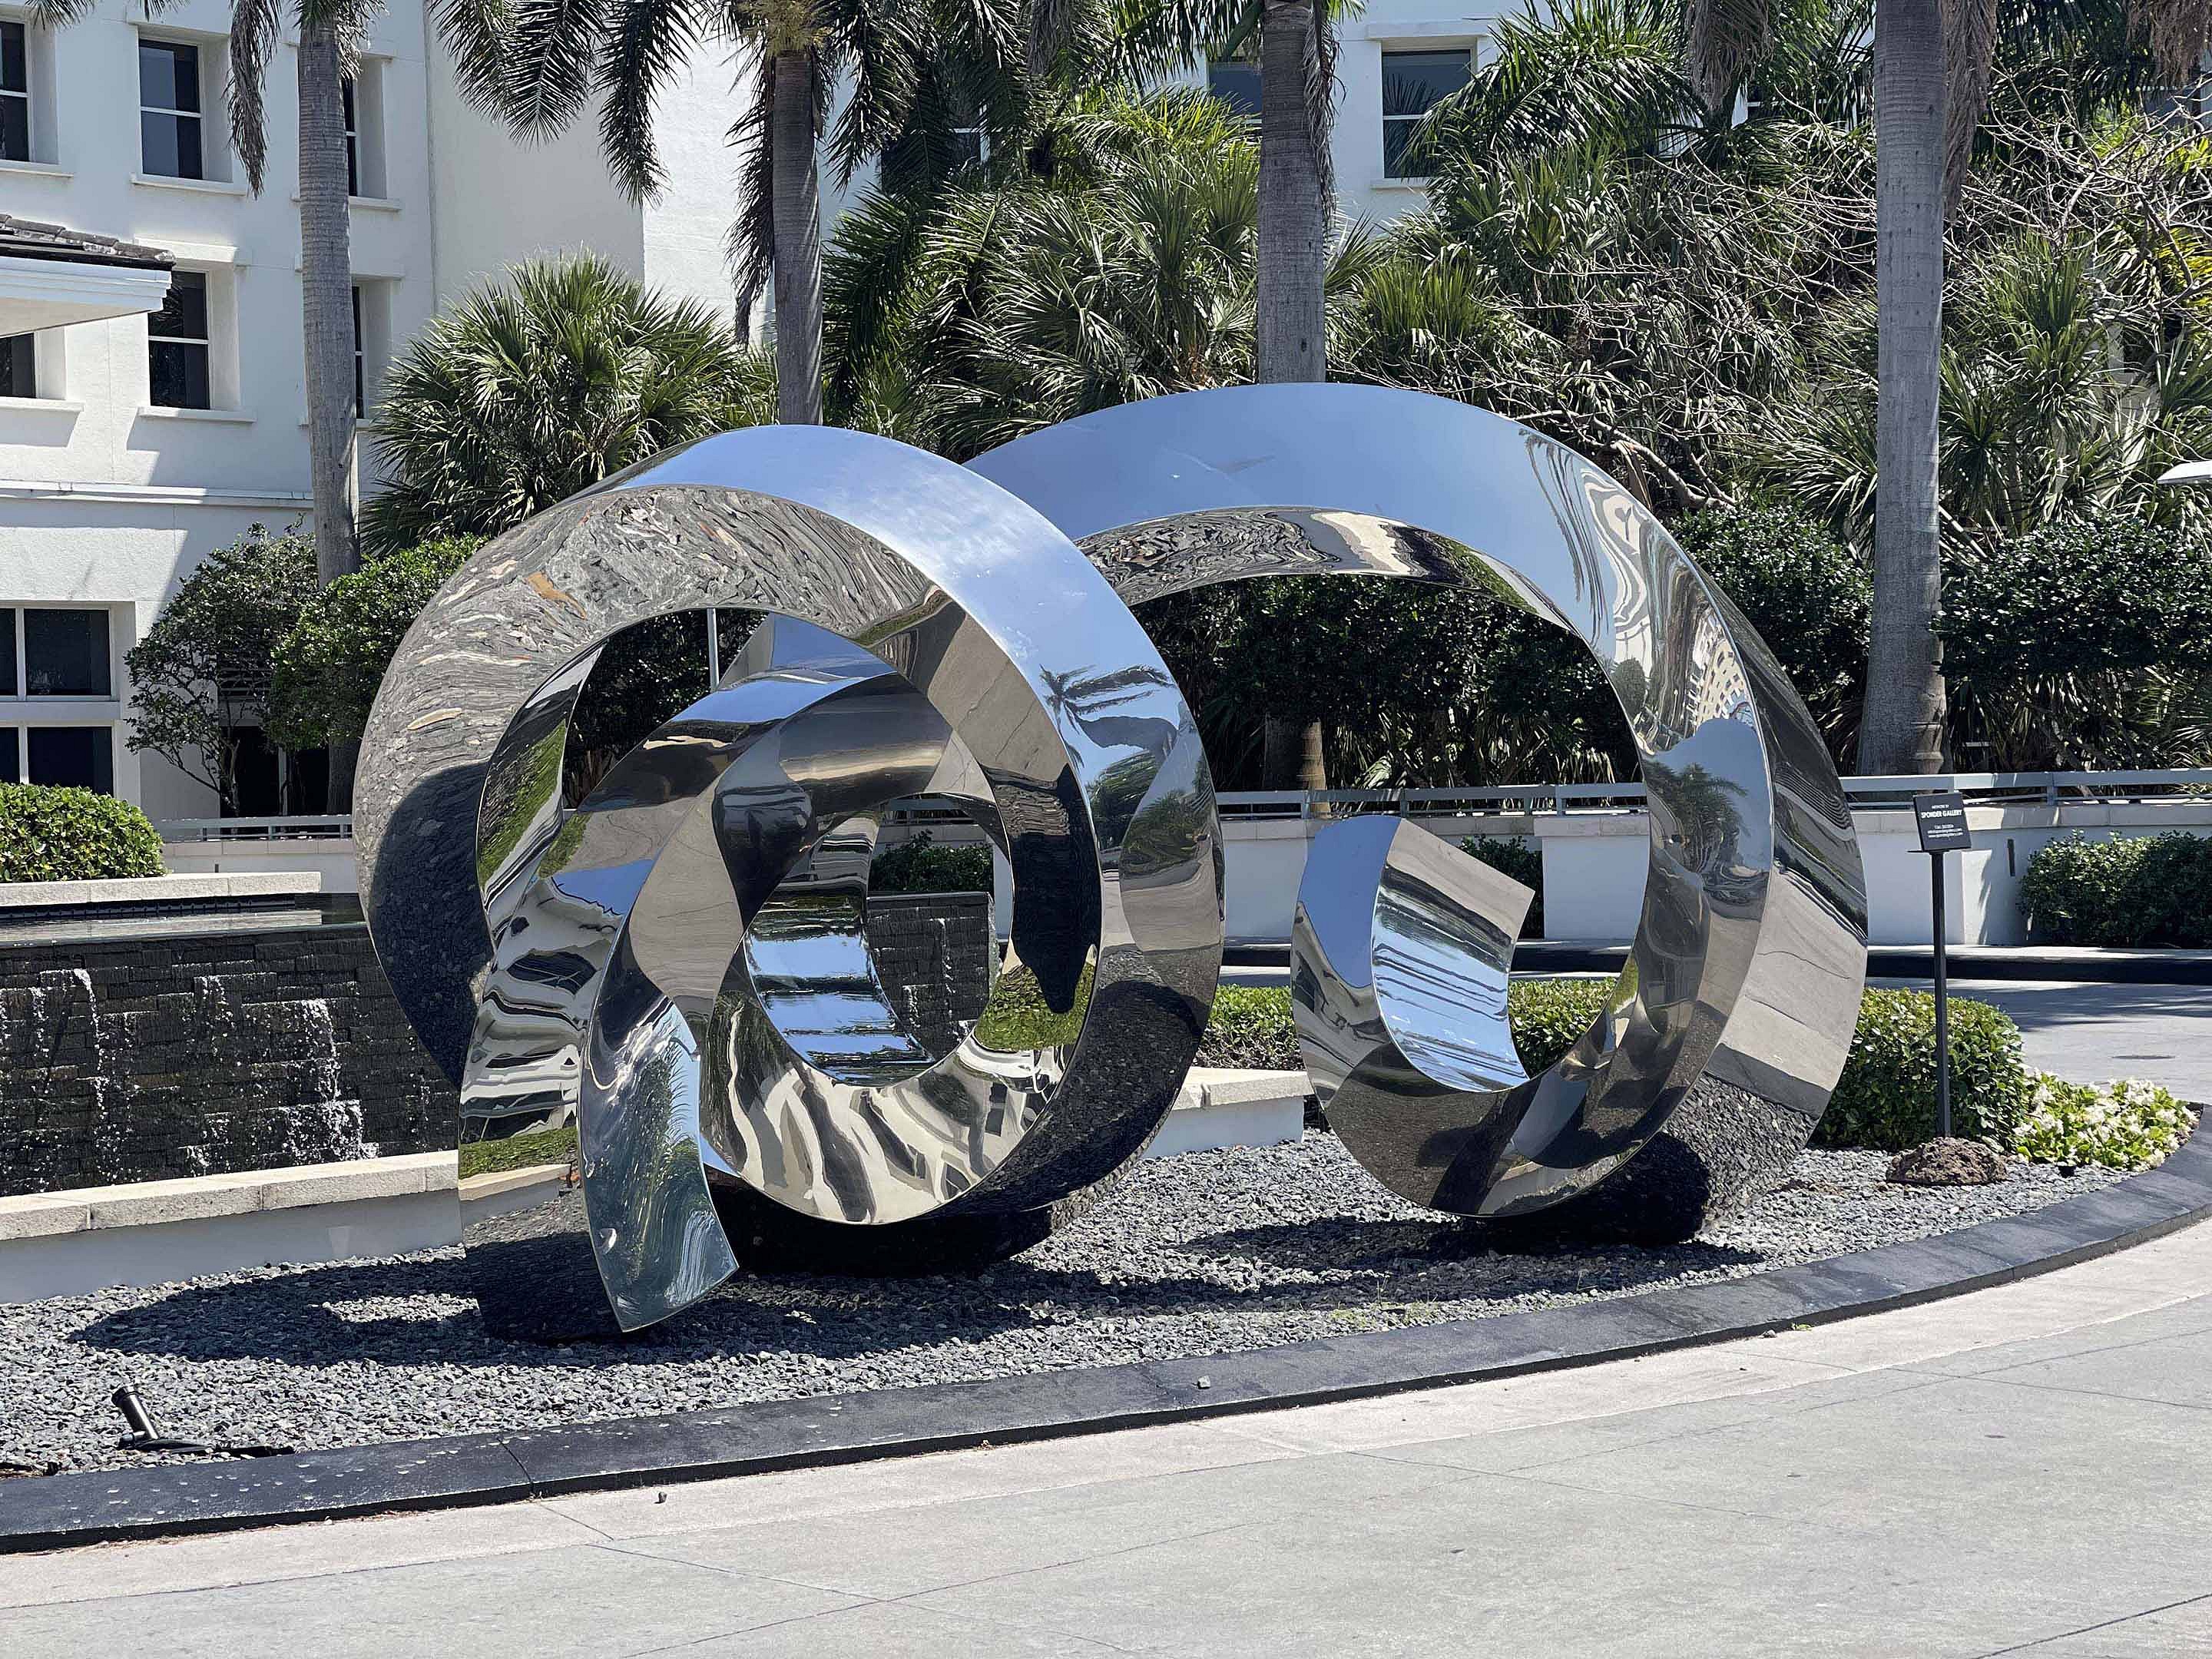 PRESS RELEASE: Palm Beach Modern + Contemporary 2022, Mar 24 - Mar 27, 2022